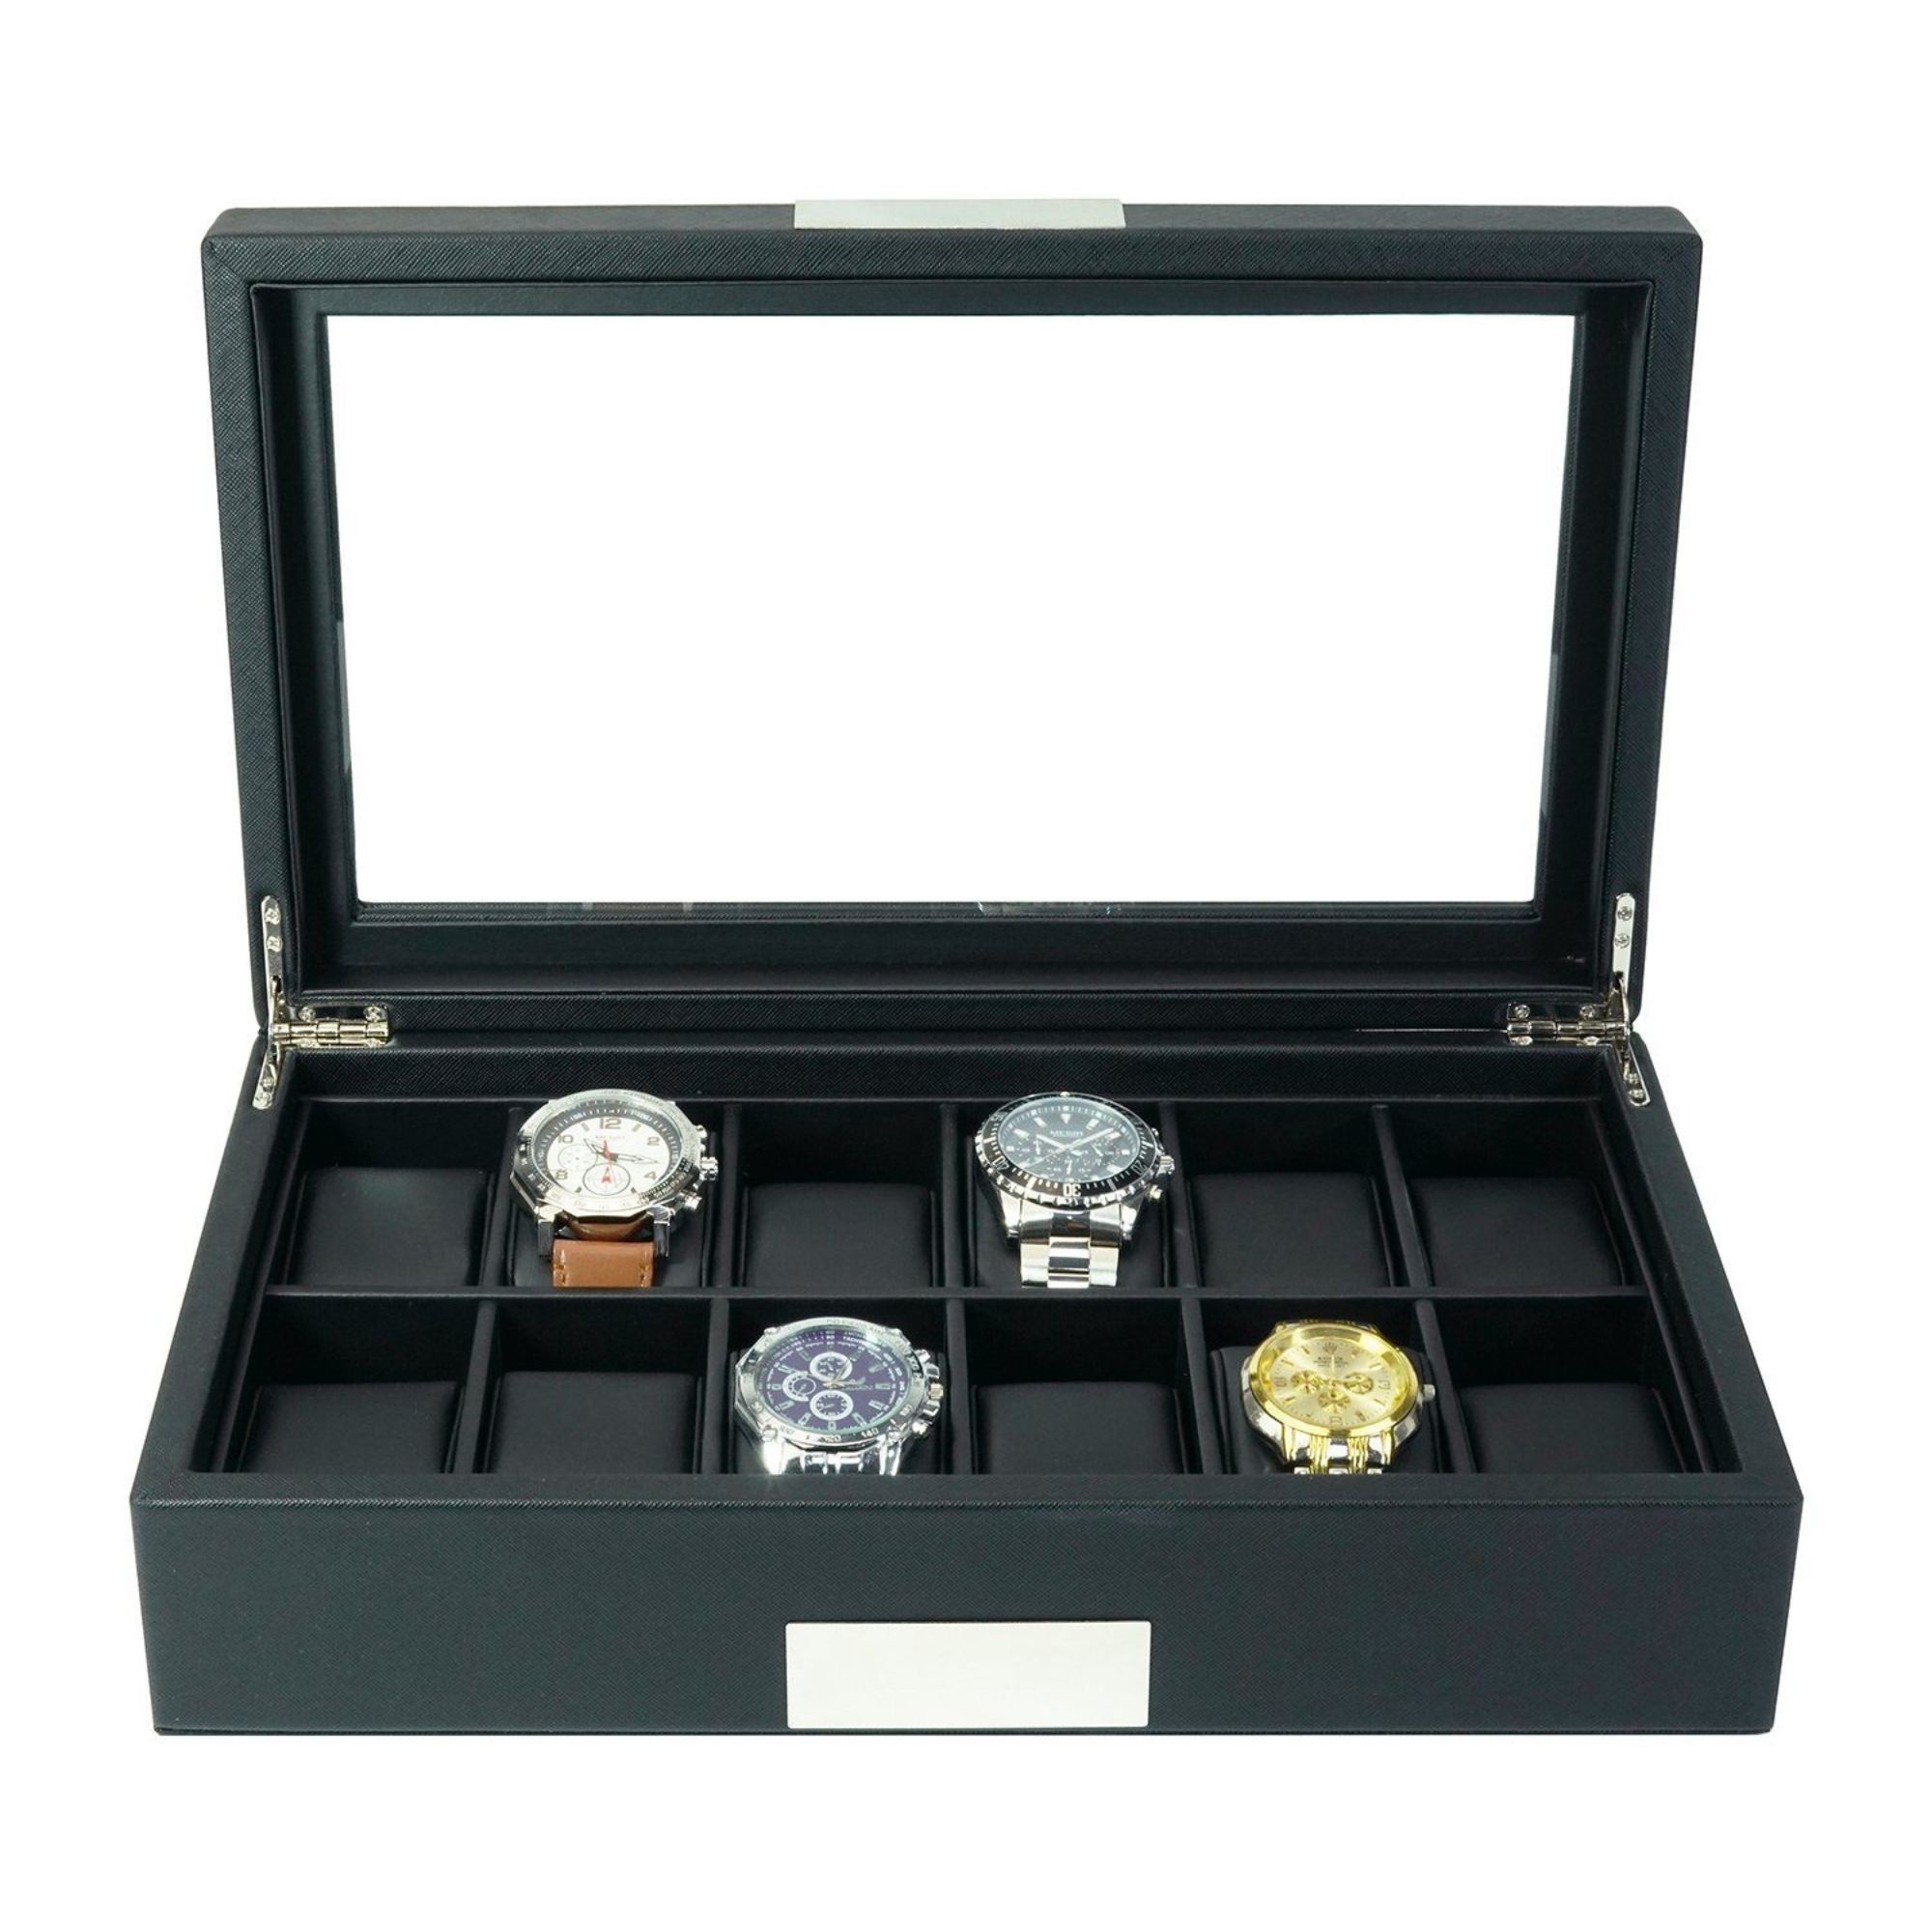 12 Slots Leather Watch Box